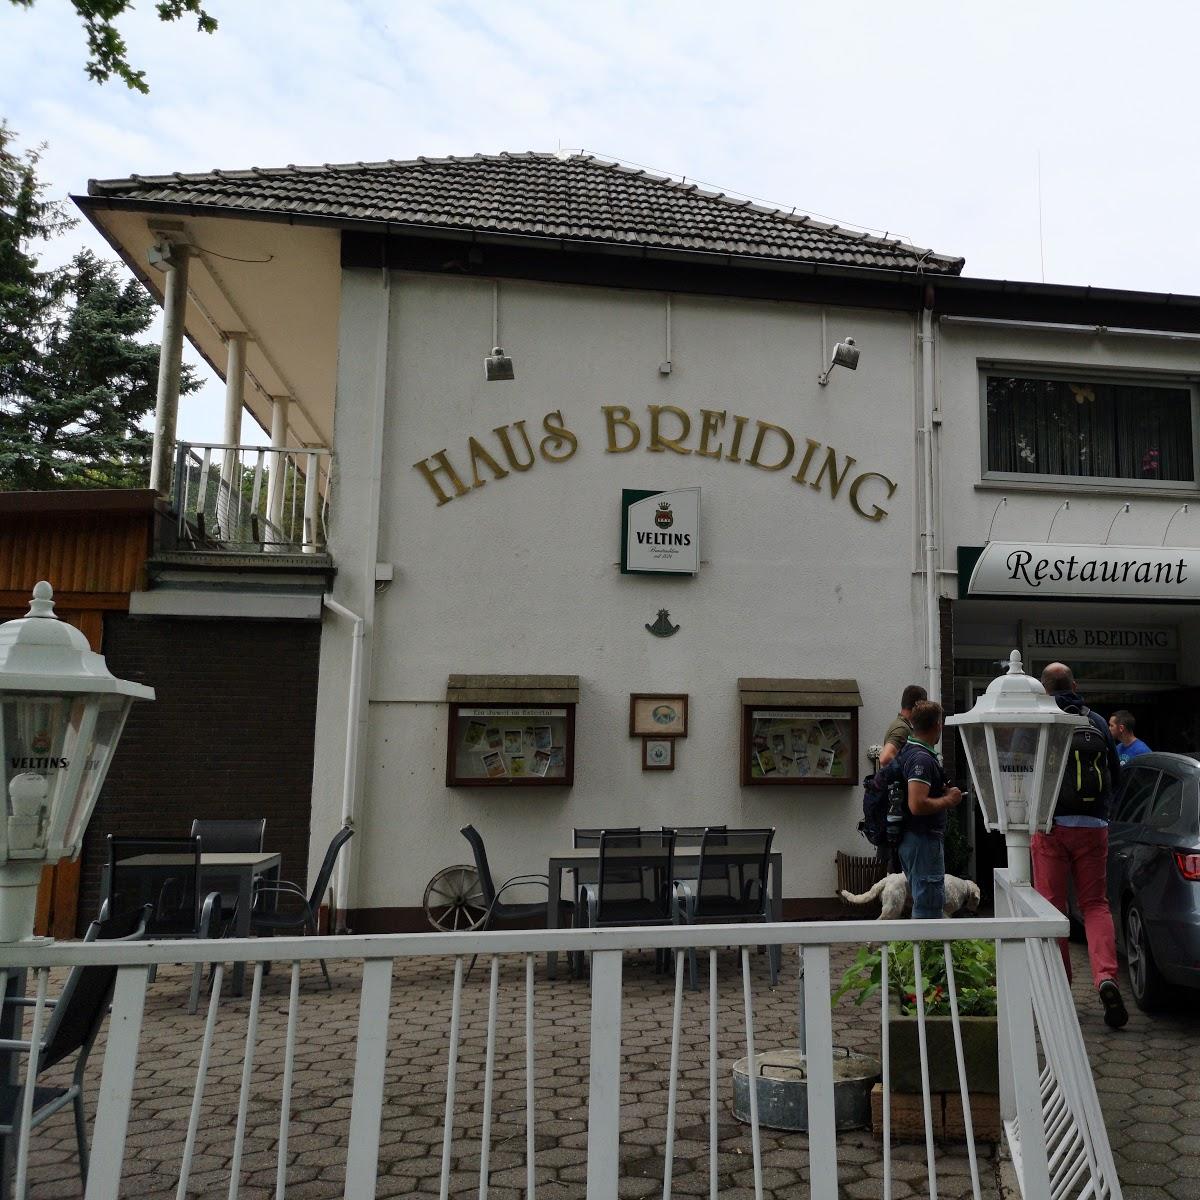 Restaurant "Haus Breiding" in Extertal